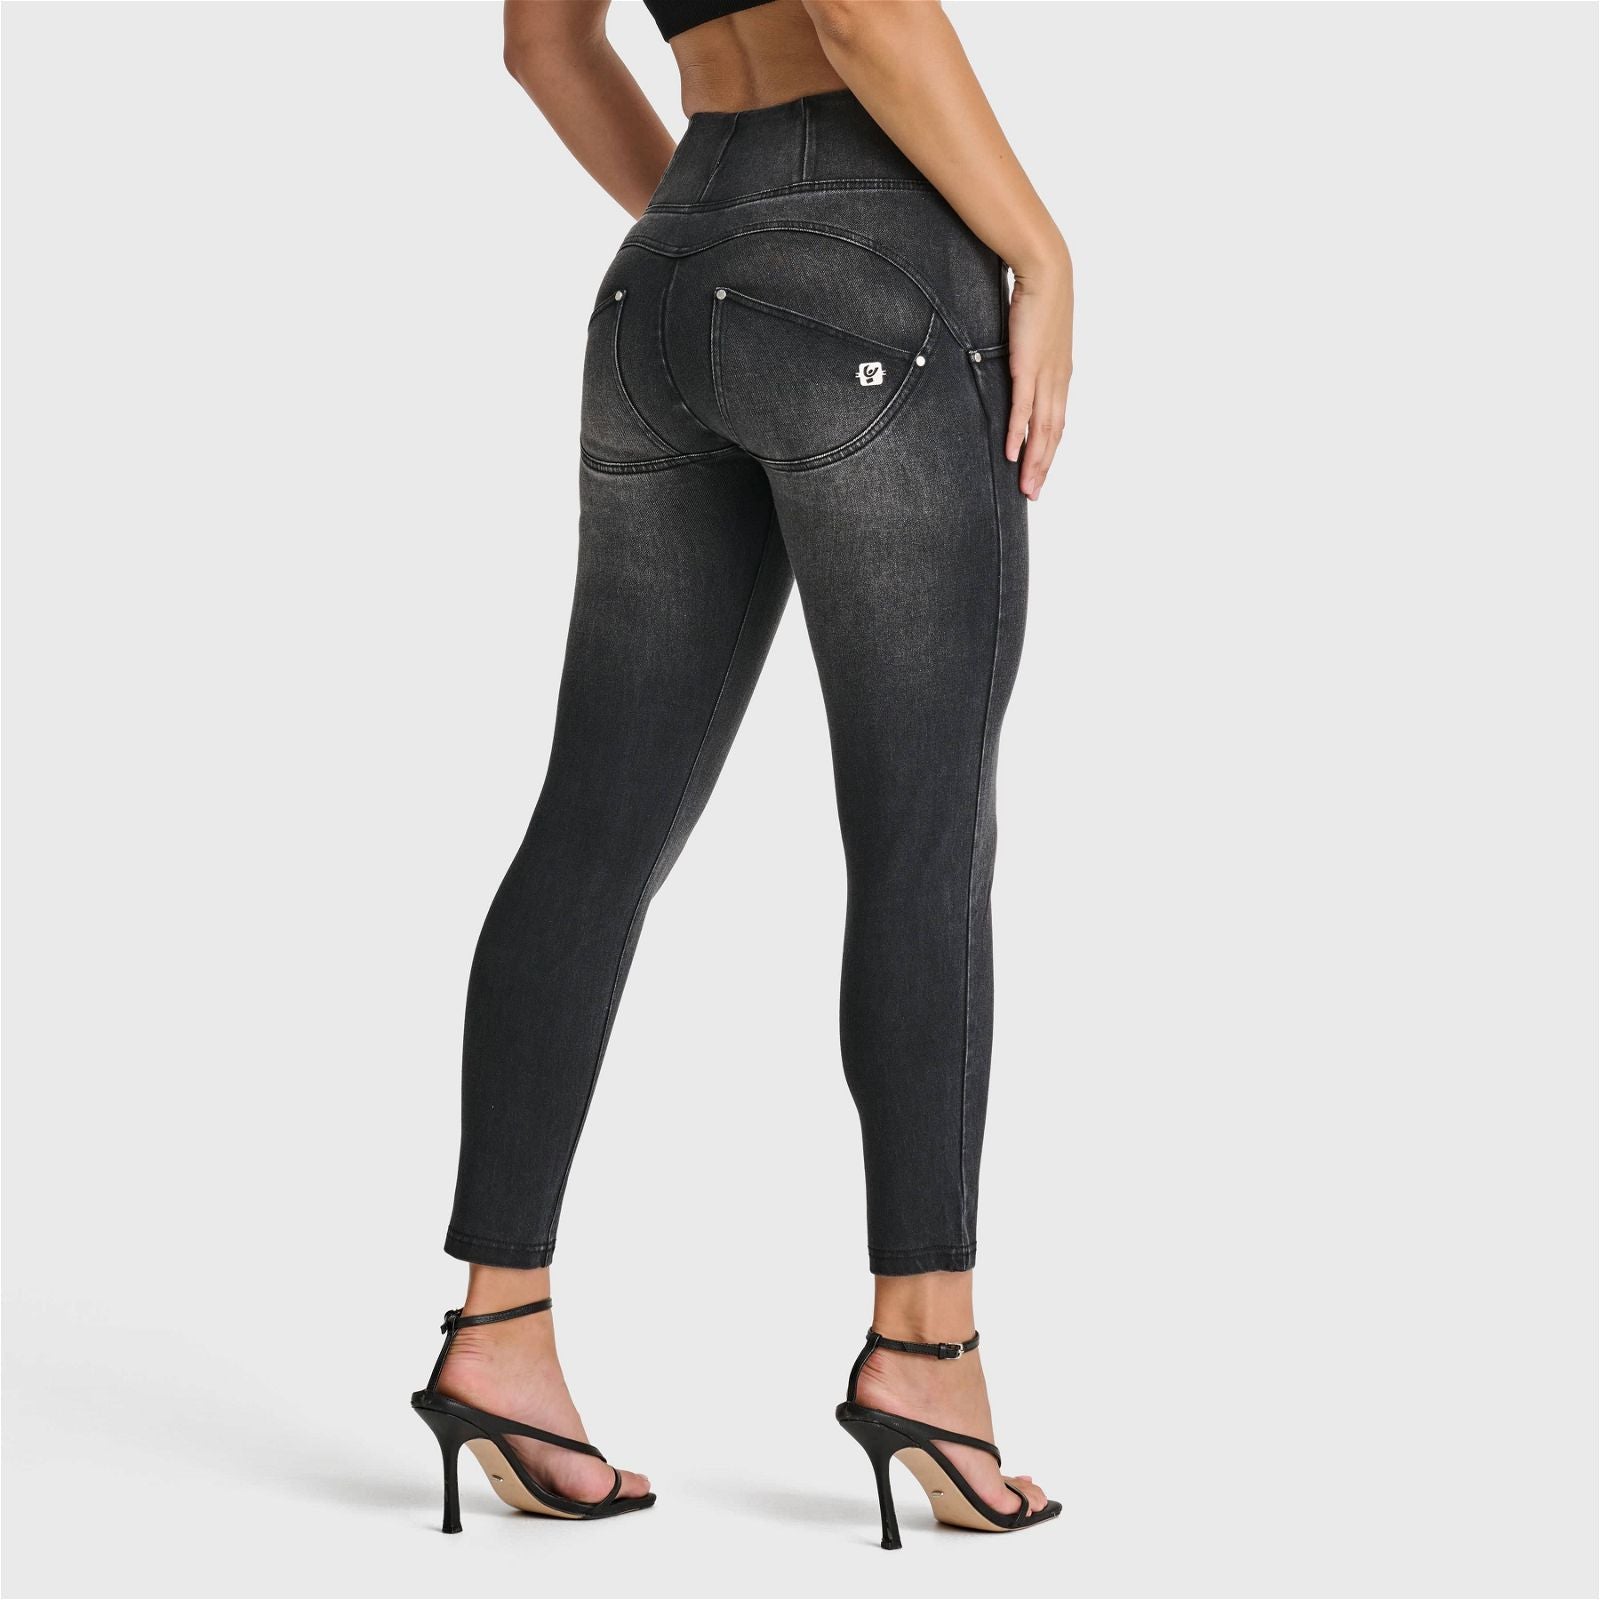 WR.UP® SNUG Jeans - High Waisted - Petite Length - Black + Black Stitching 1